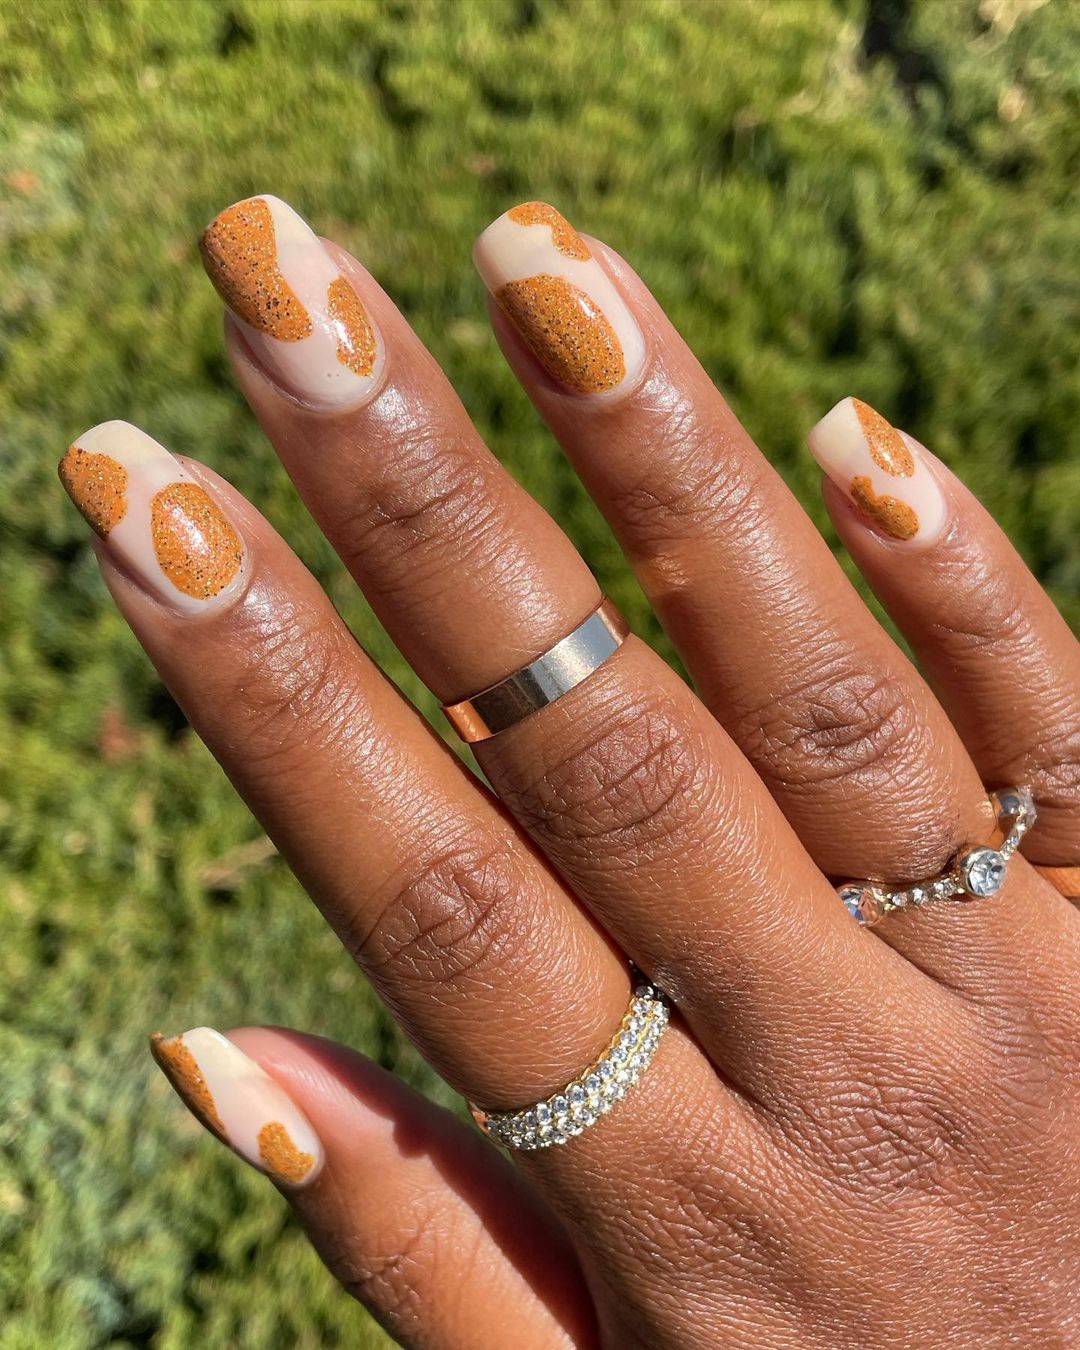 Natural nails for black women